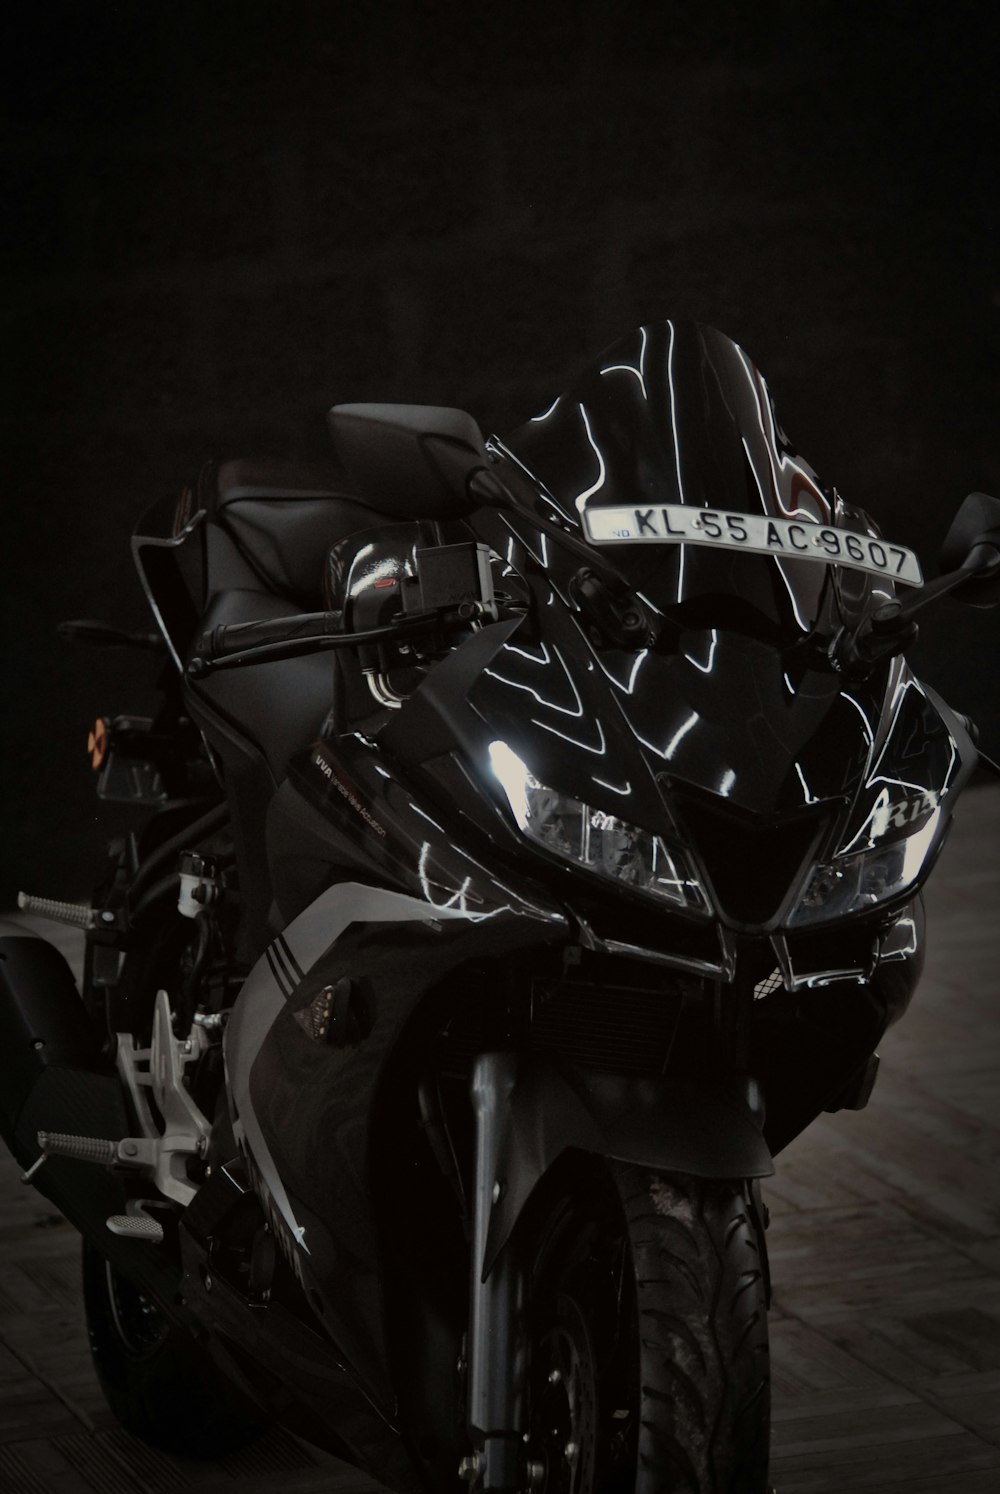 Una moto nera parcheggiata in una stanza buia